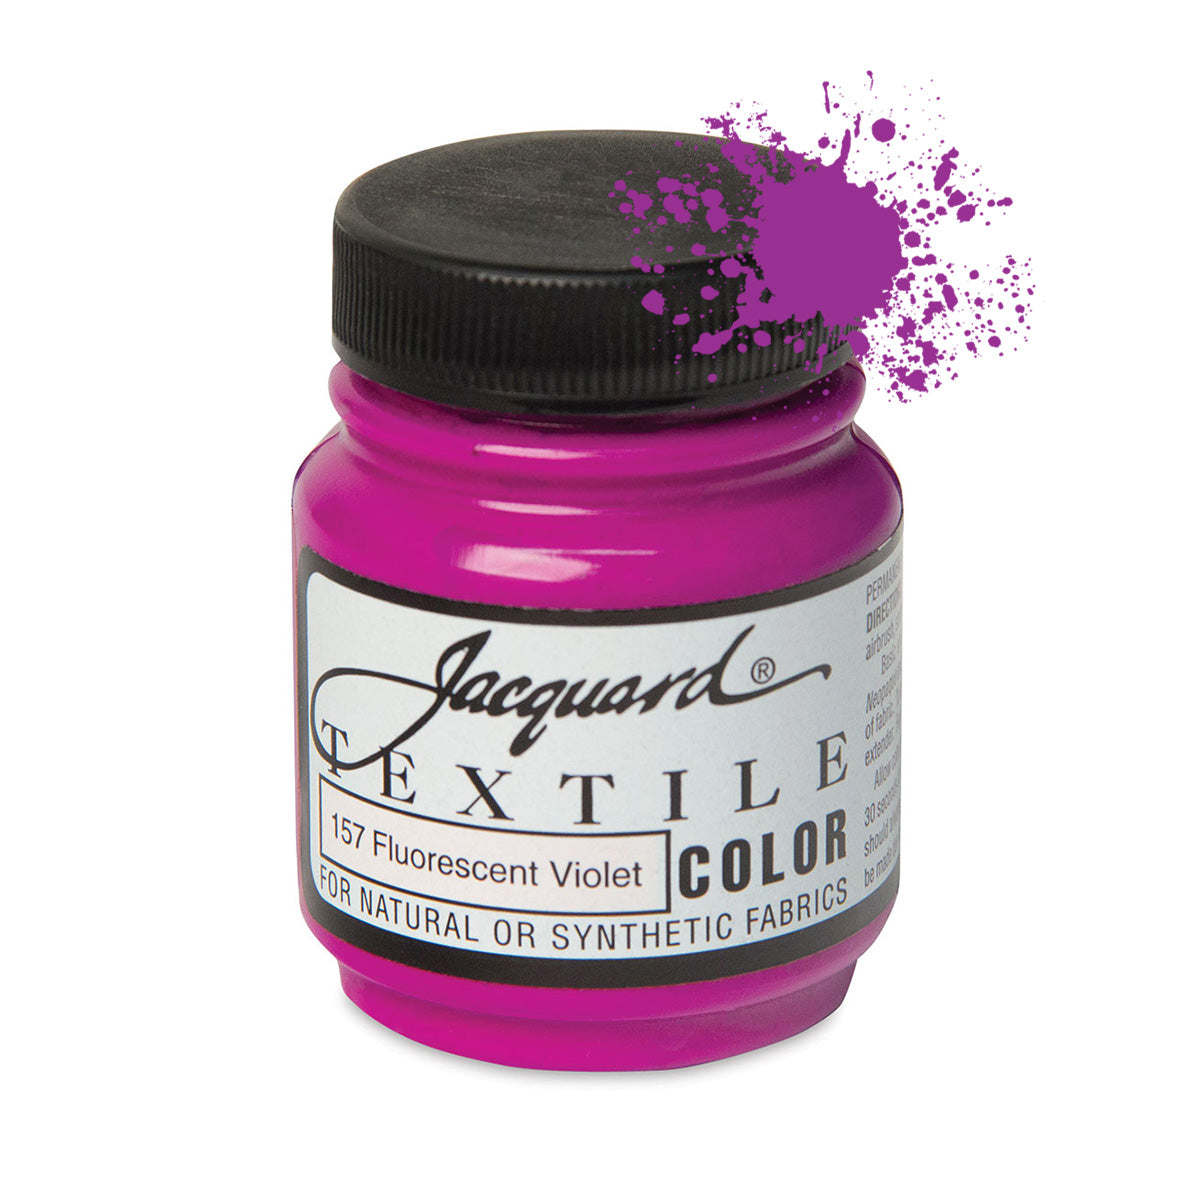 Aquatex Fabric Paint - Pink - 500g Pack, Fabric Paint